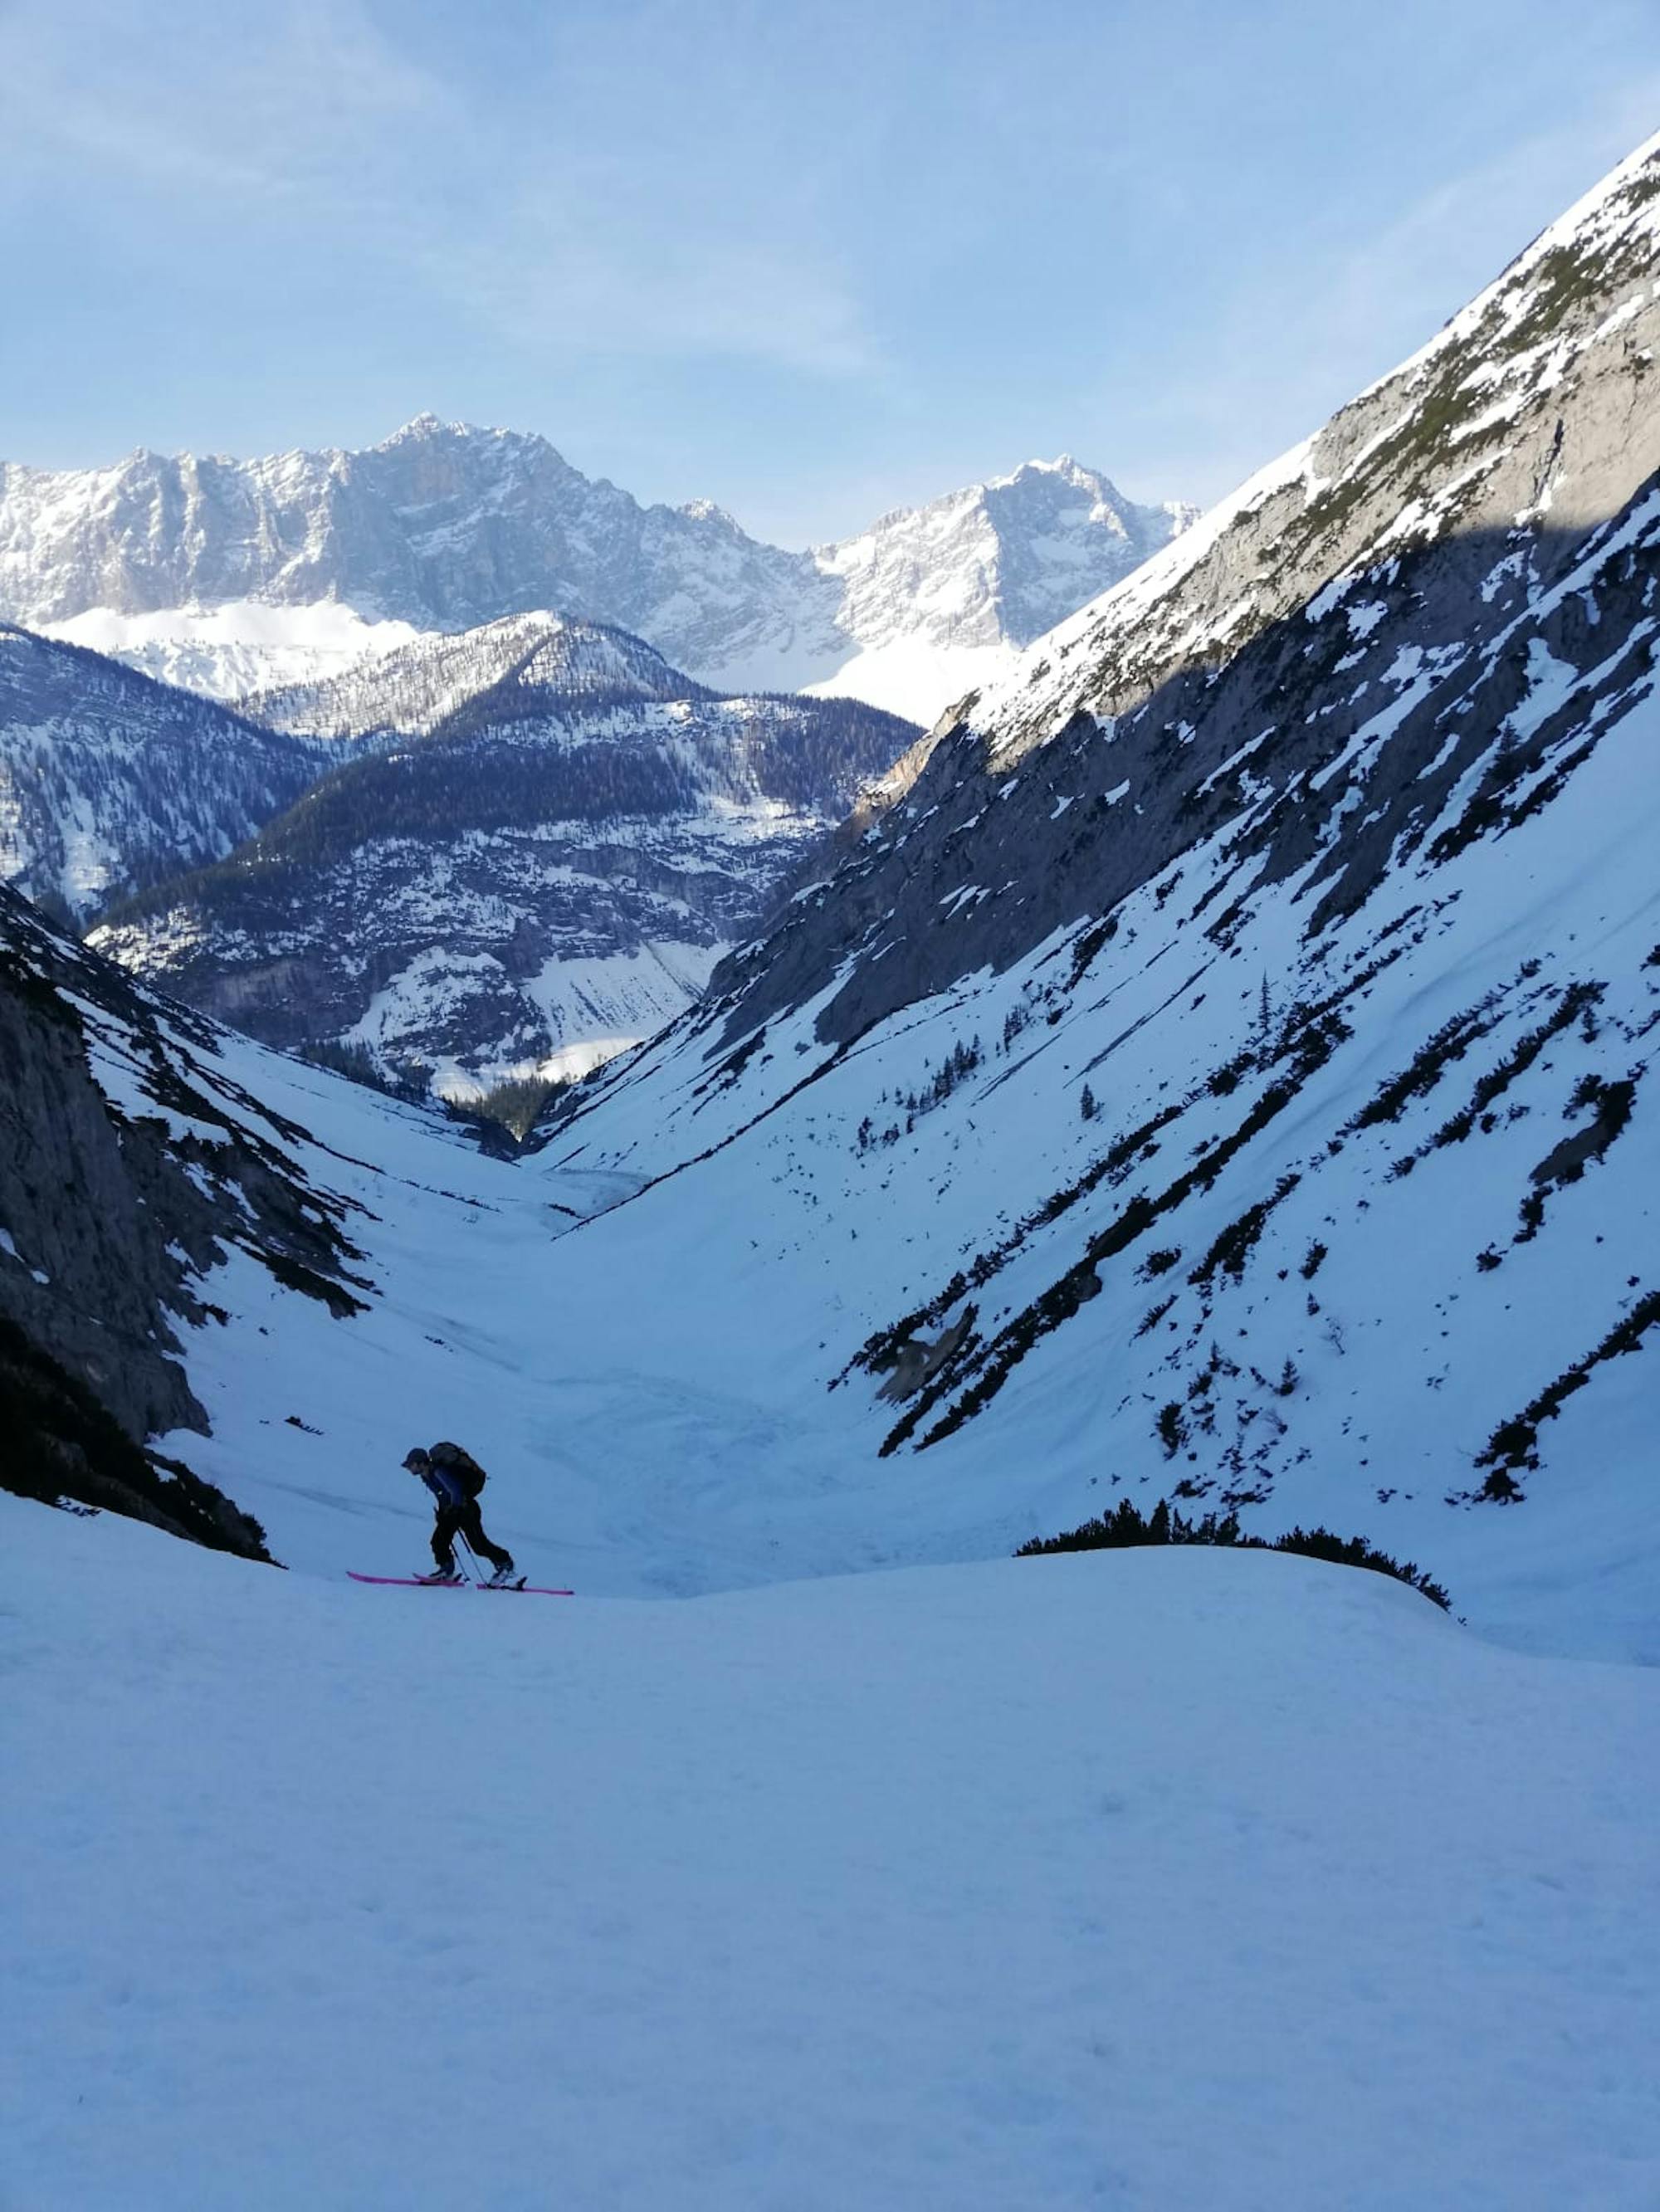 Truly wild ski mountaineering on the way up the Birkkarspitze